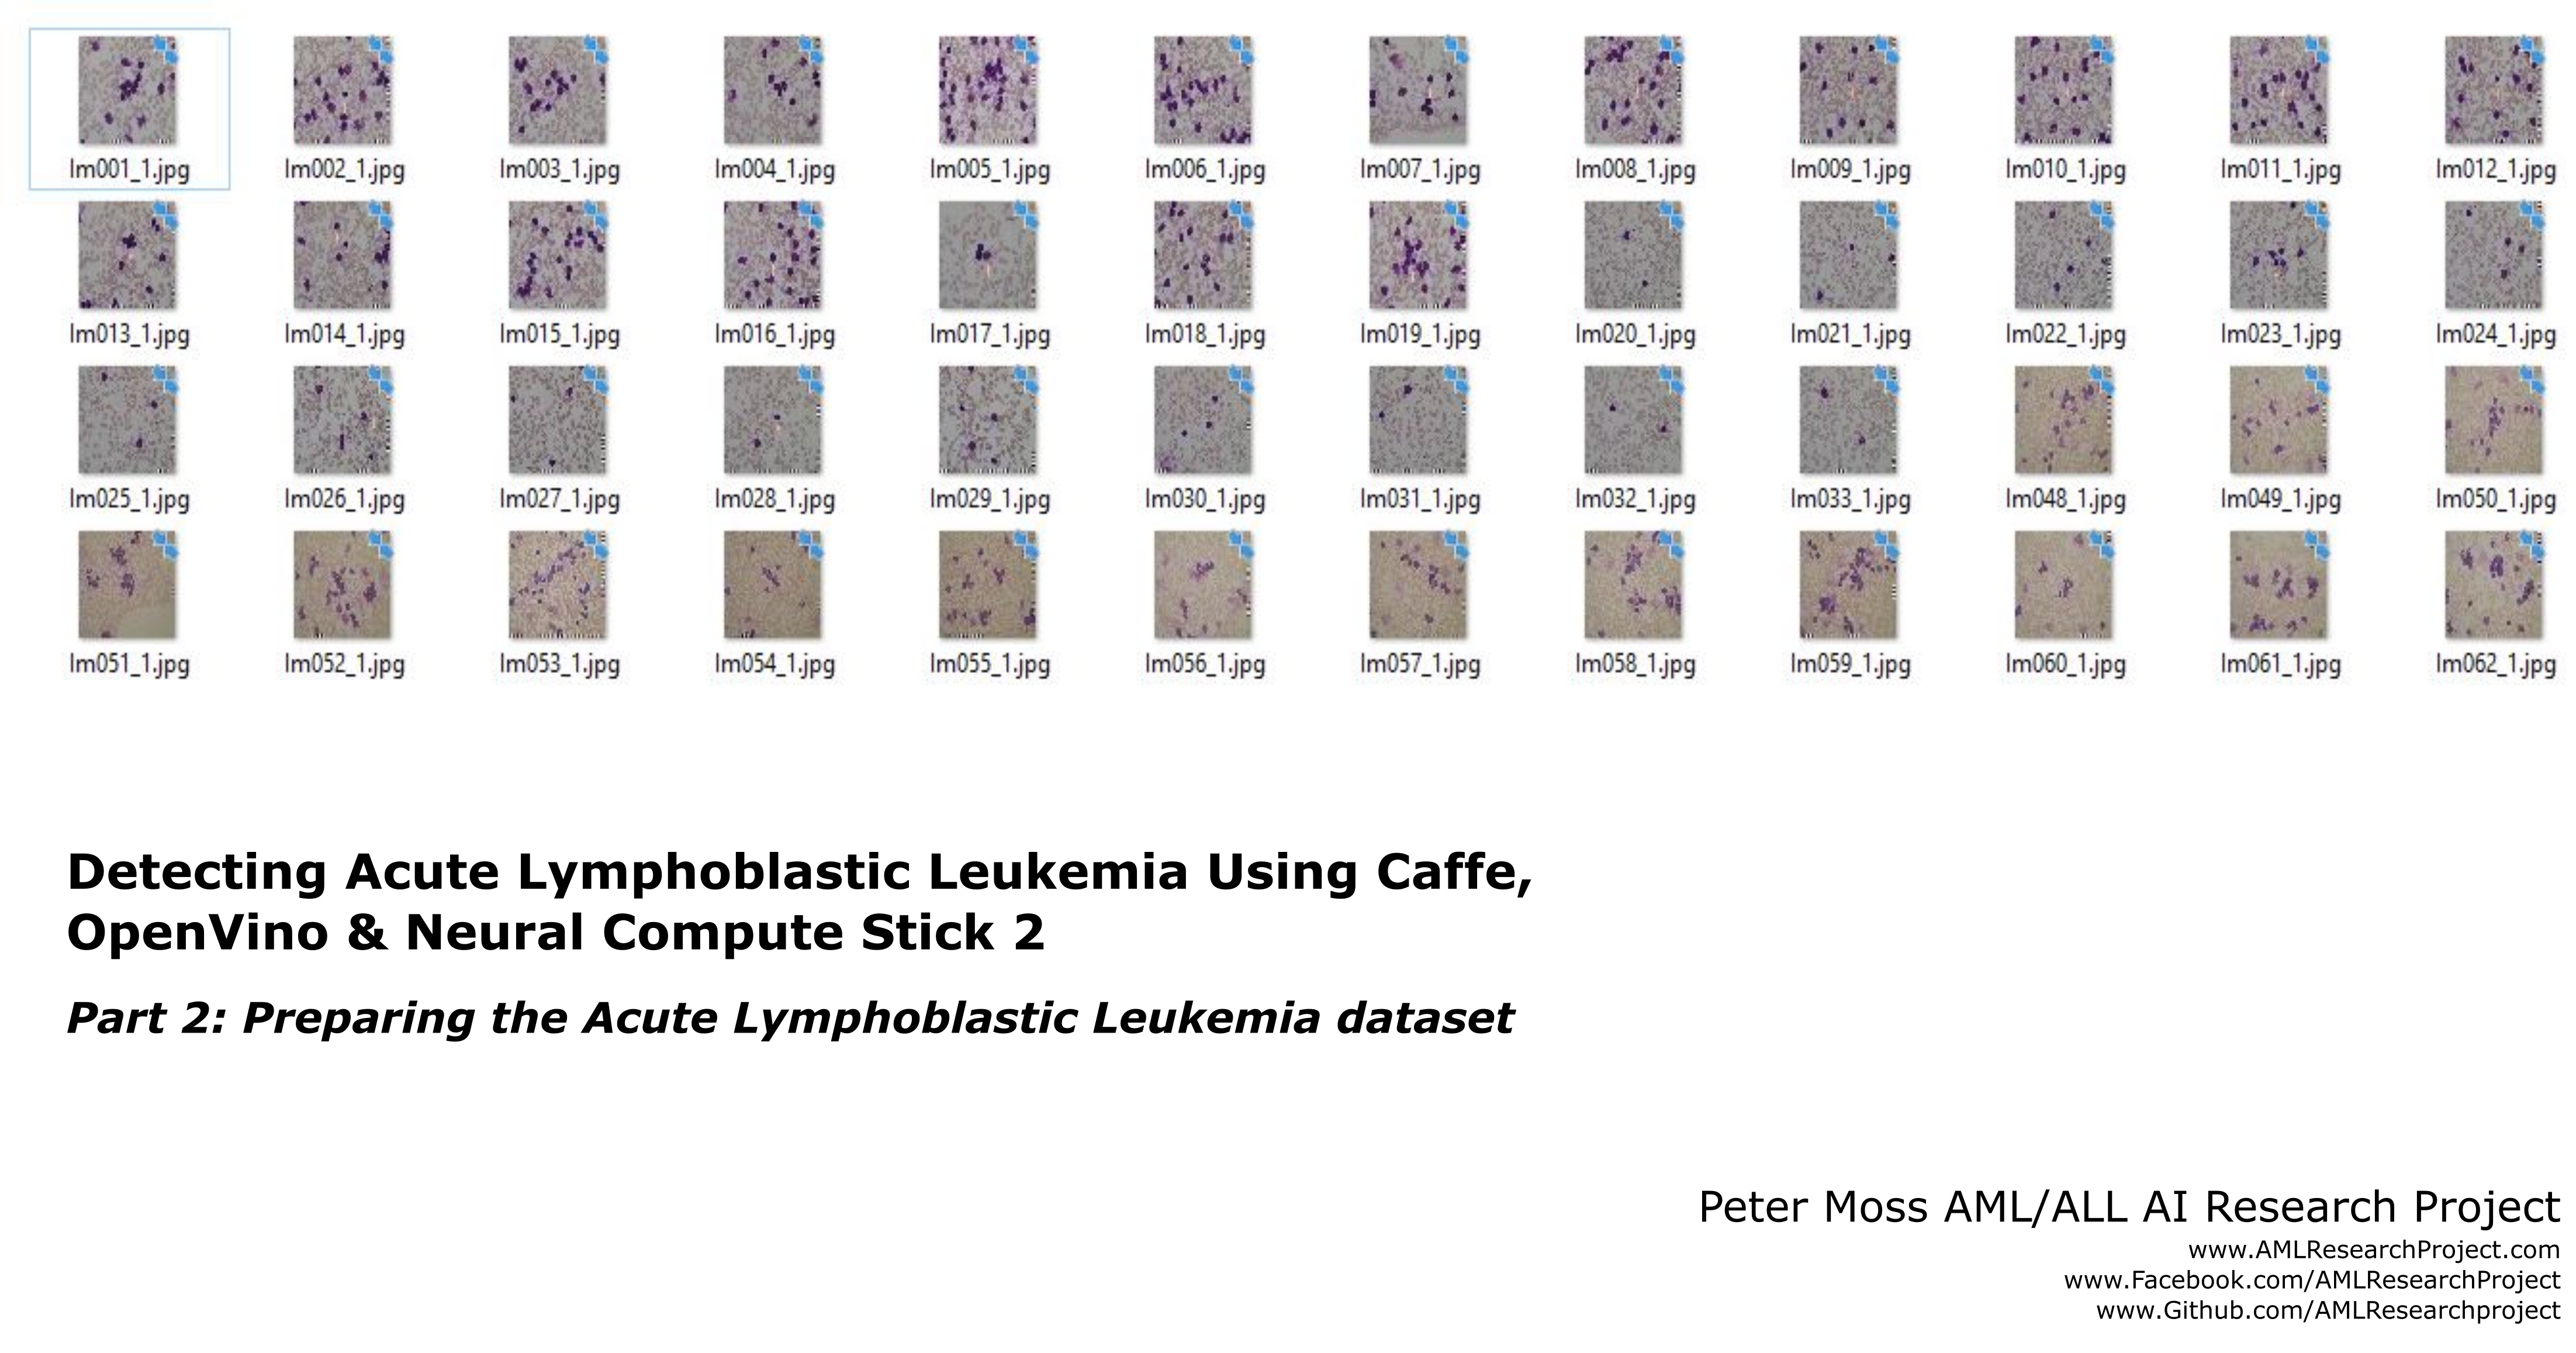 Detecting Acute Lymphoblastic Leukemia Using Caffe, OpenVino & Neural Compute Stick 2: Part 2 Preparing the Acute Lymphoblastic Leukemia dataset